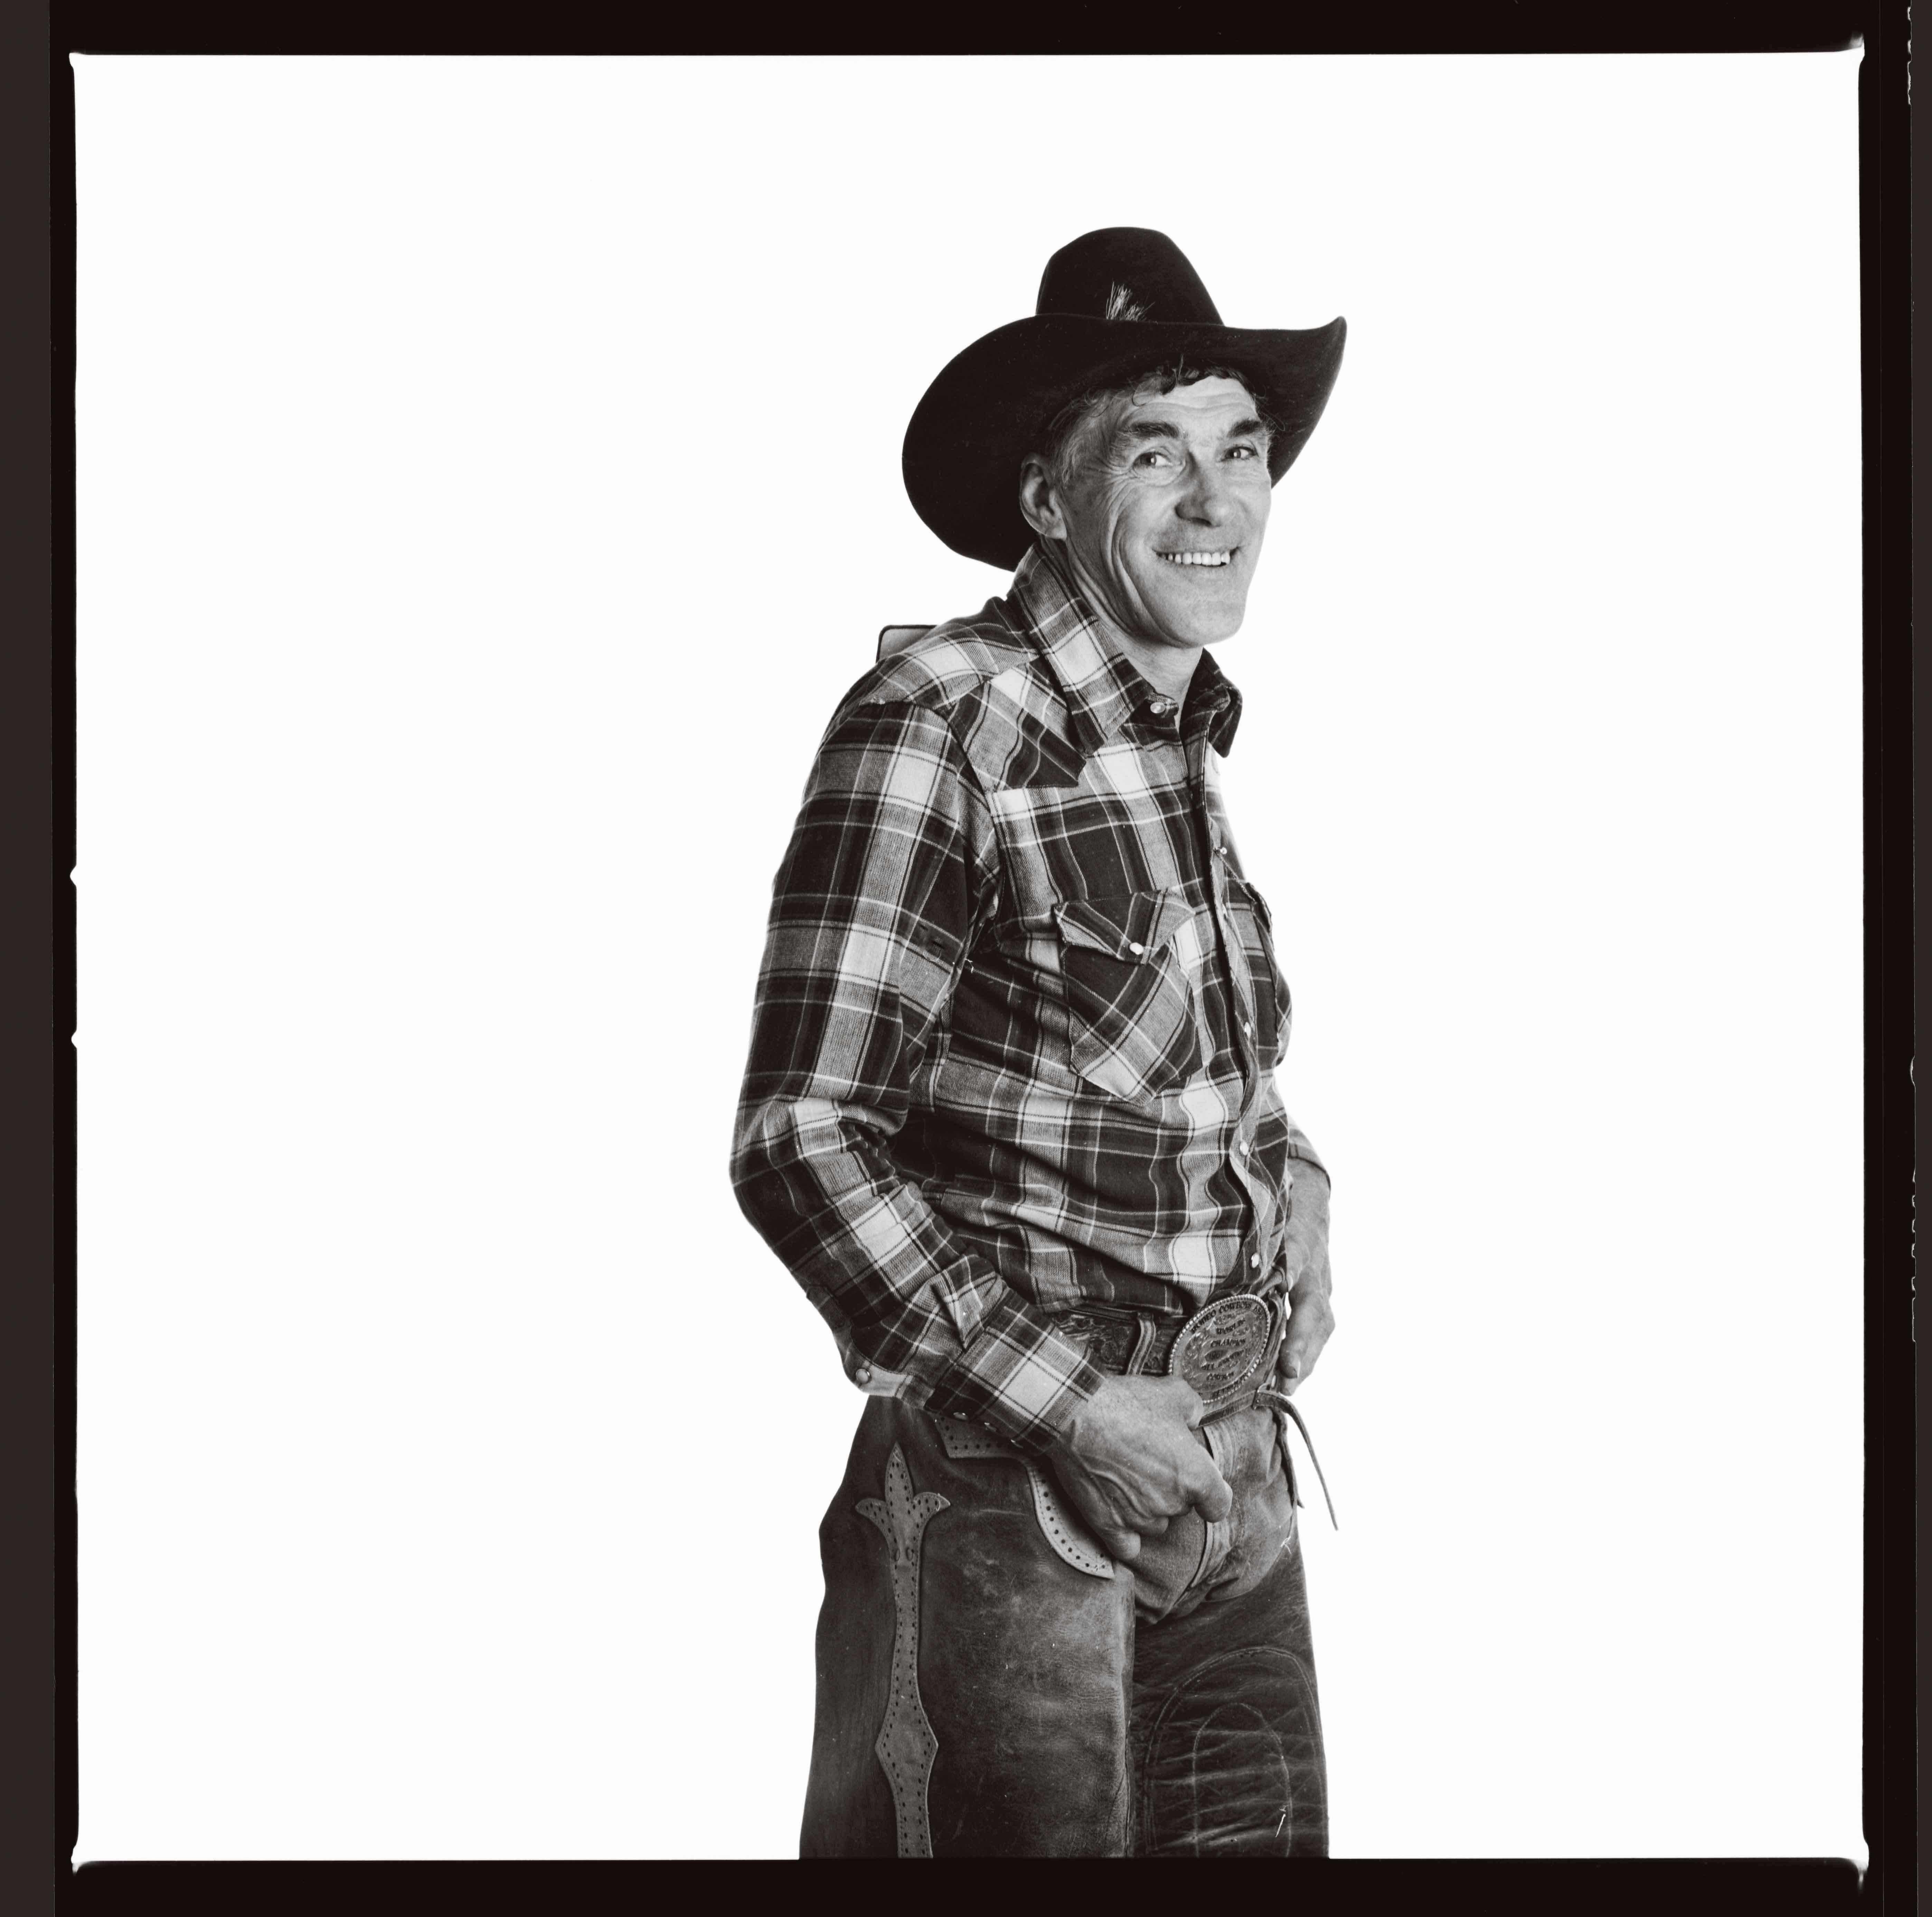 Benny Reynolds - National Old Timers Rodeo Association, Reno, Nevada, 1990